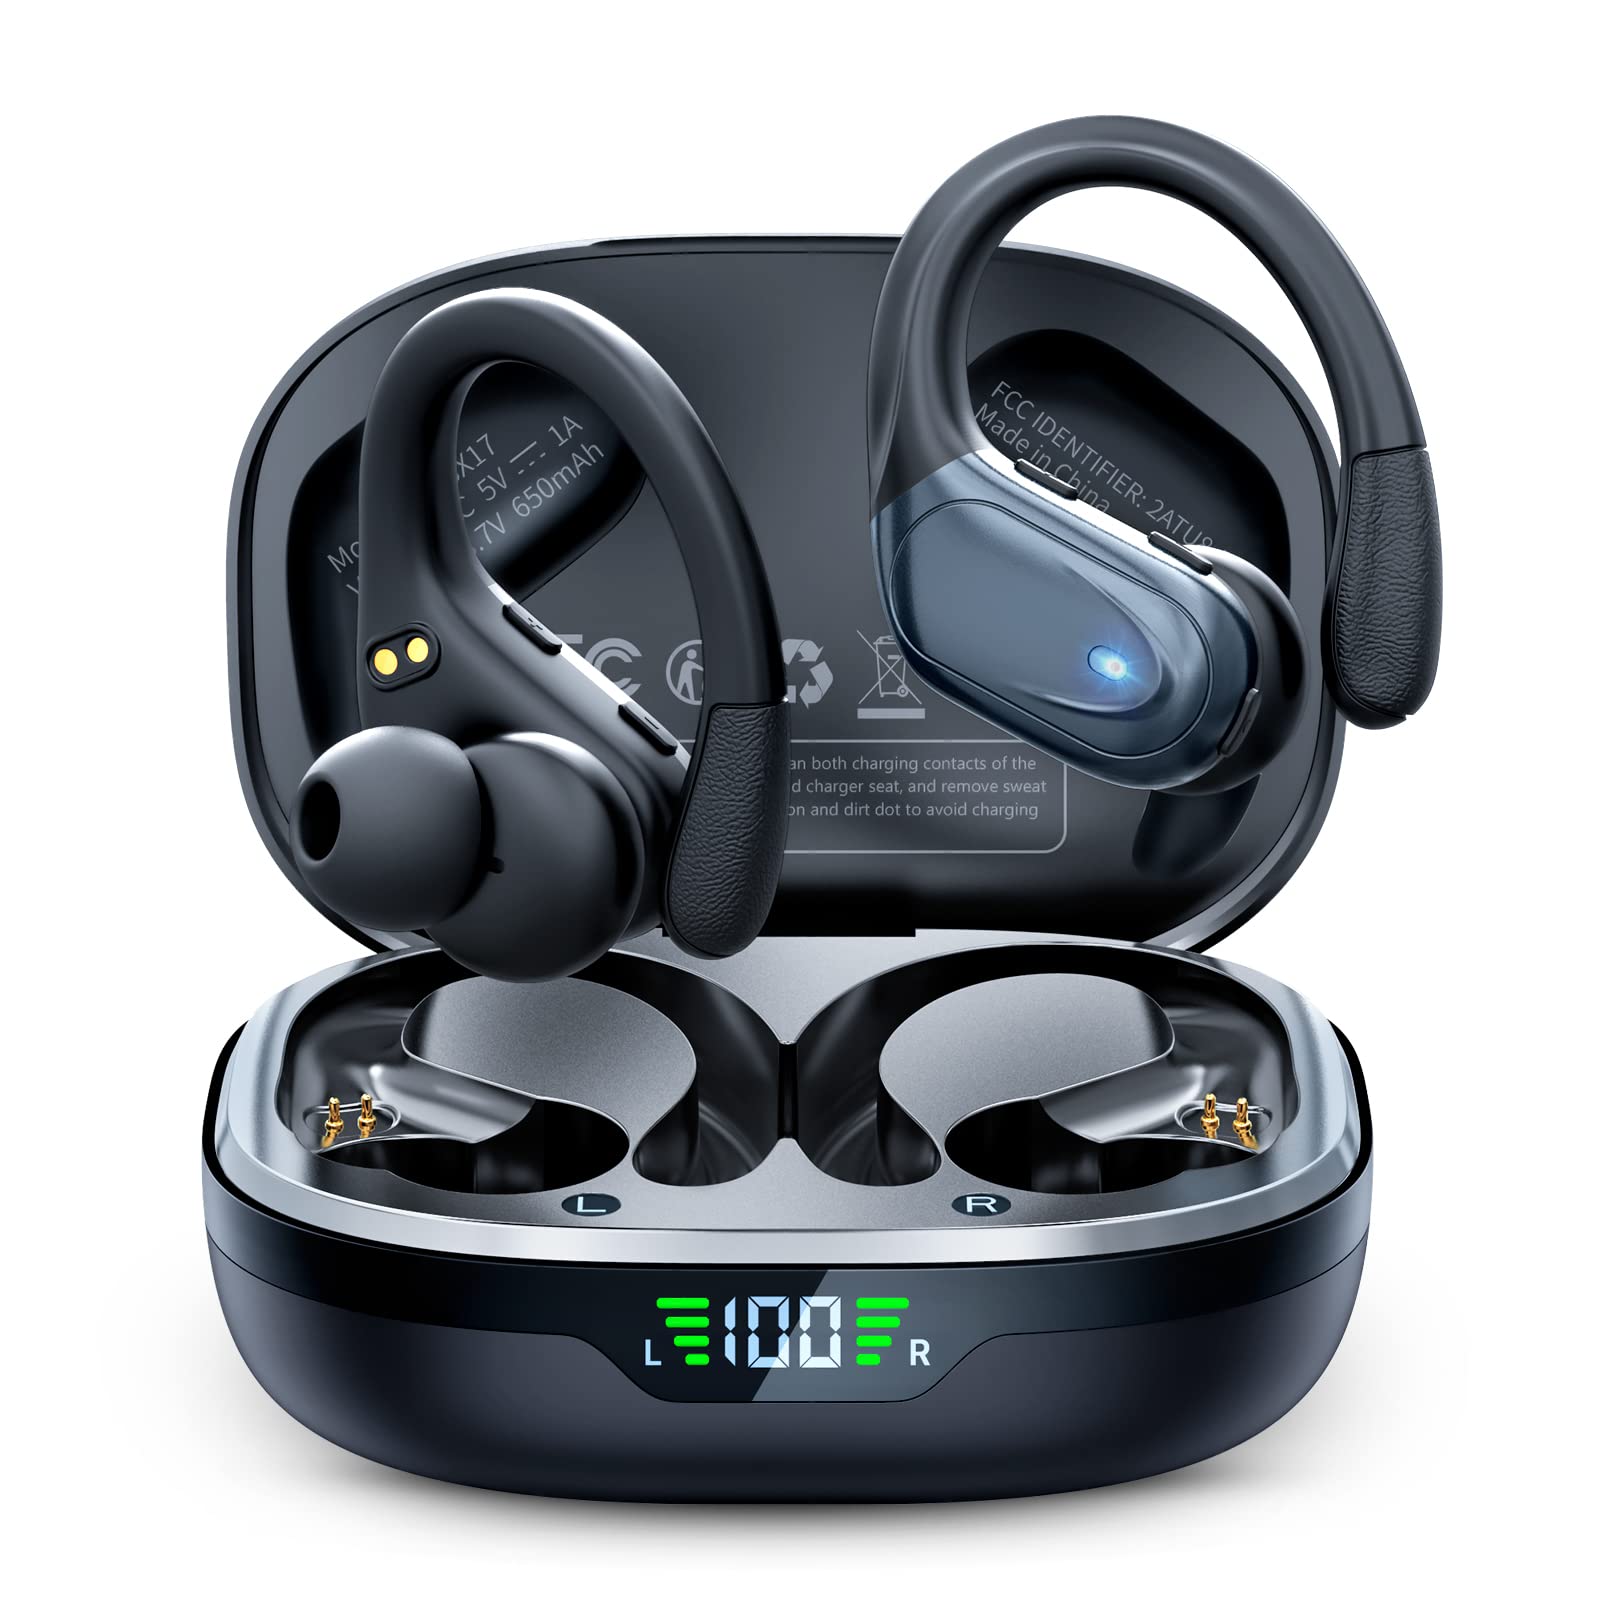 Wireless Bluetooth Headphones 75Hrs Playtime LED Display Hi-Fi Stereo Earphones with Microphone IPX6 Waterproof Running Headphones Bluetooth 5.1 Button Control Headphones